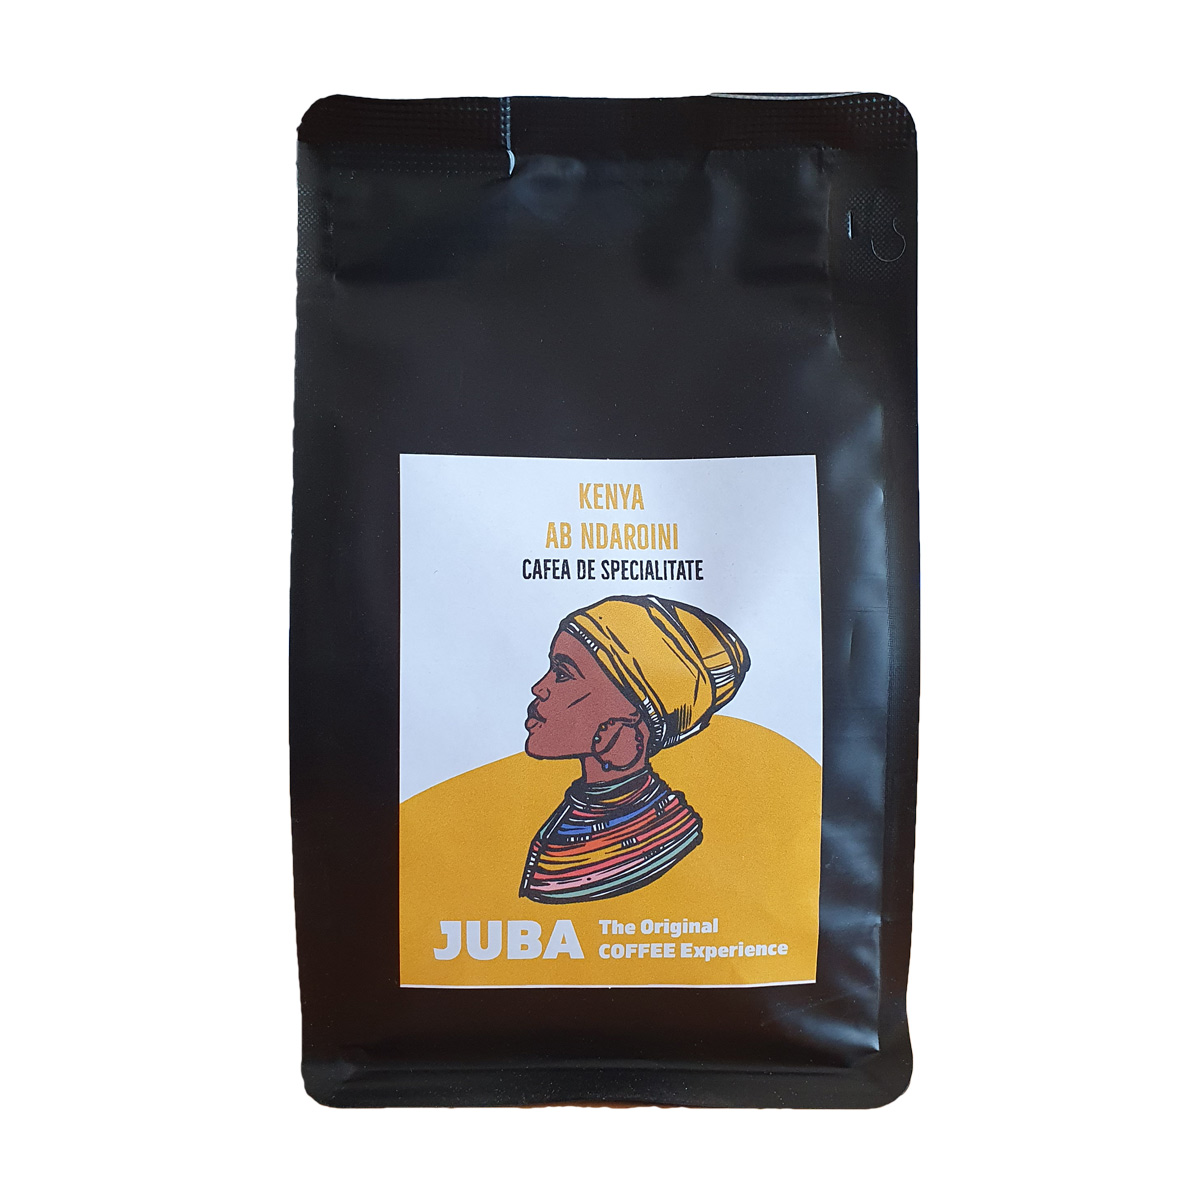 Juba Kenya AB Ndaroini cafea de specialitate 250g